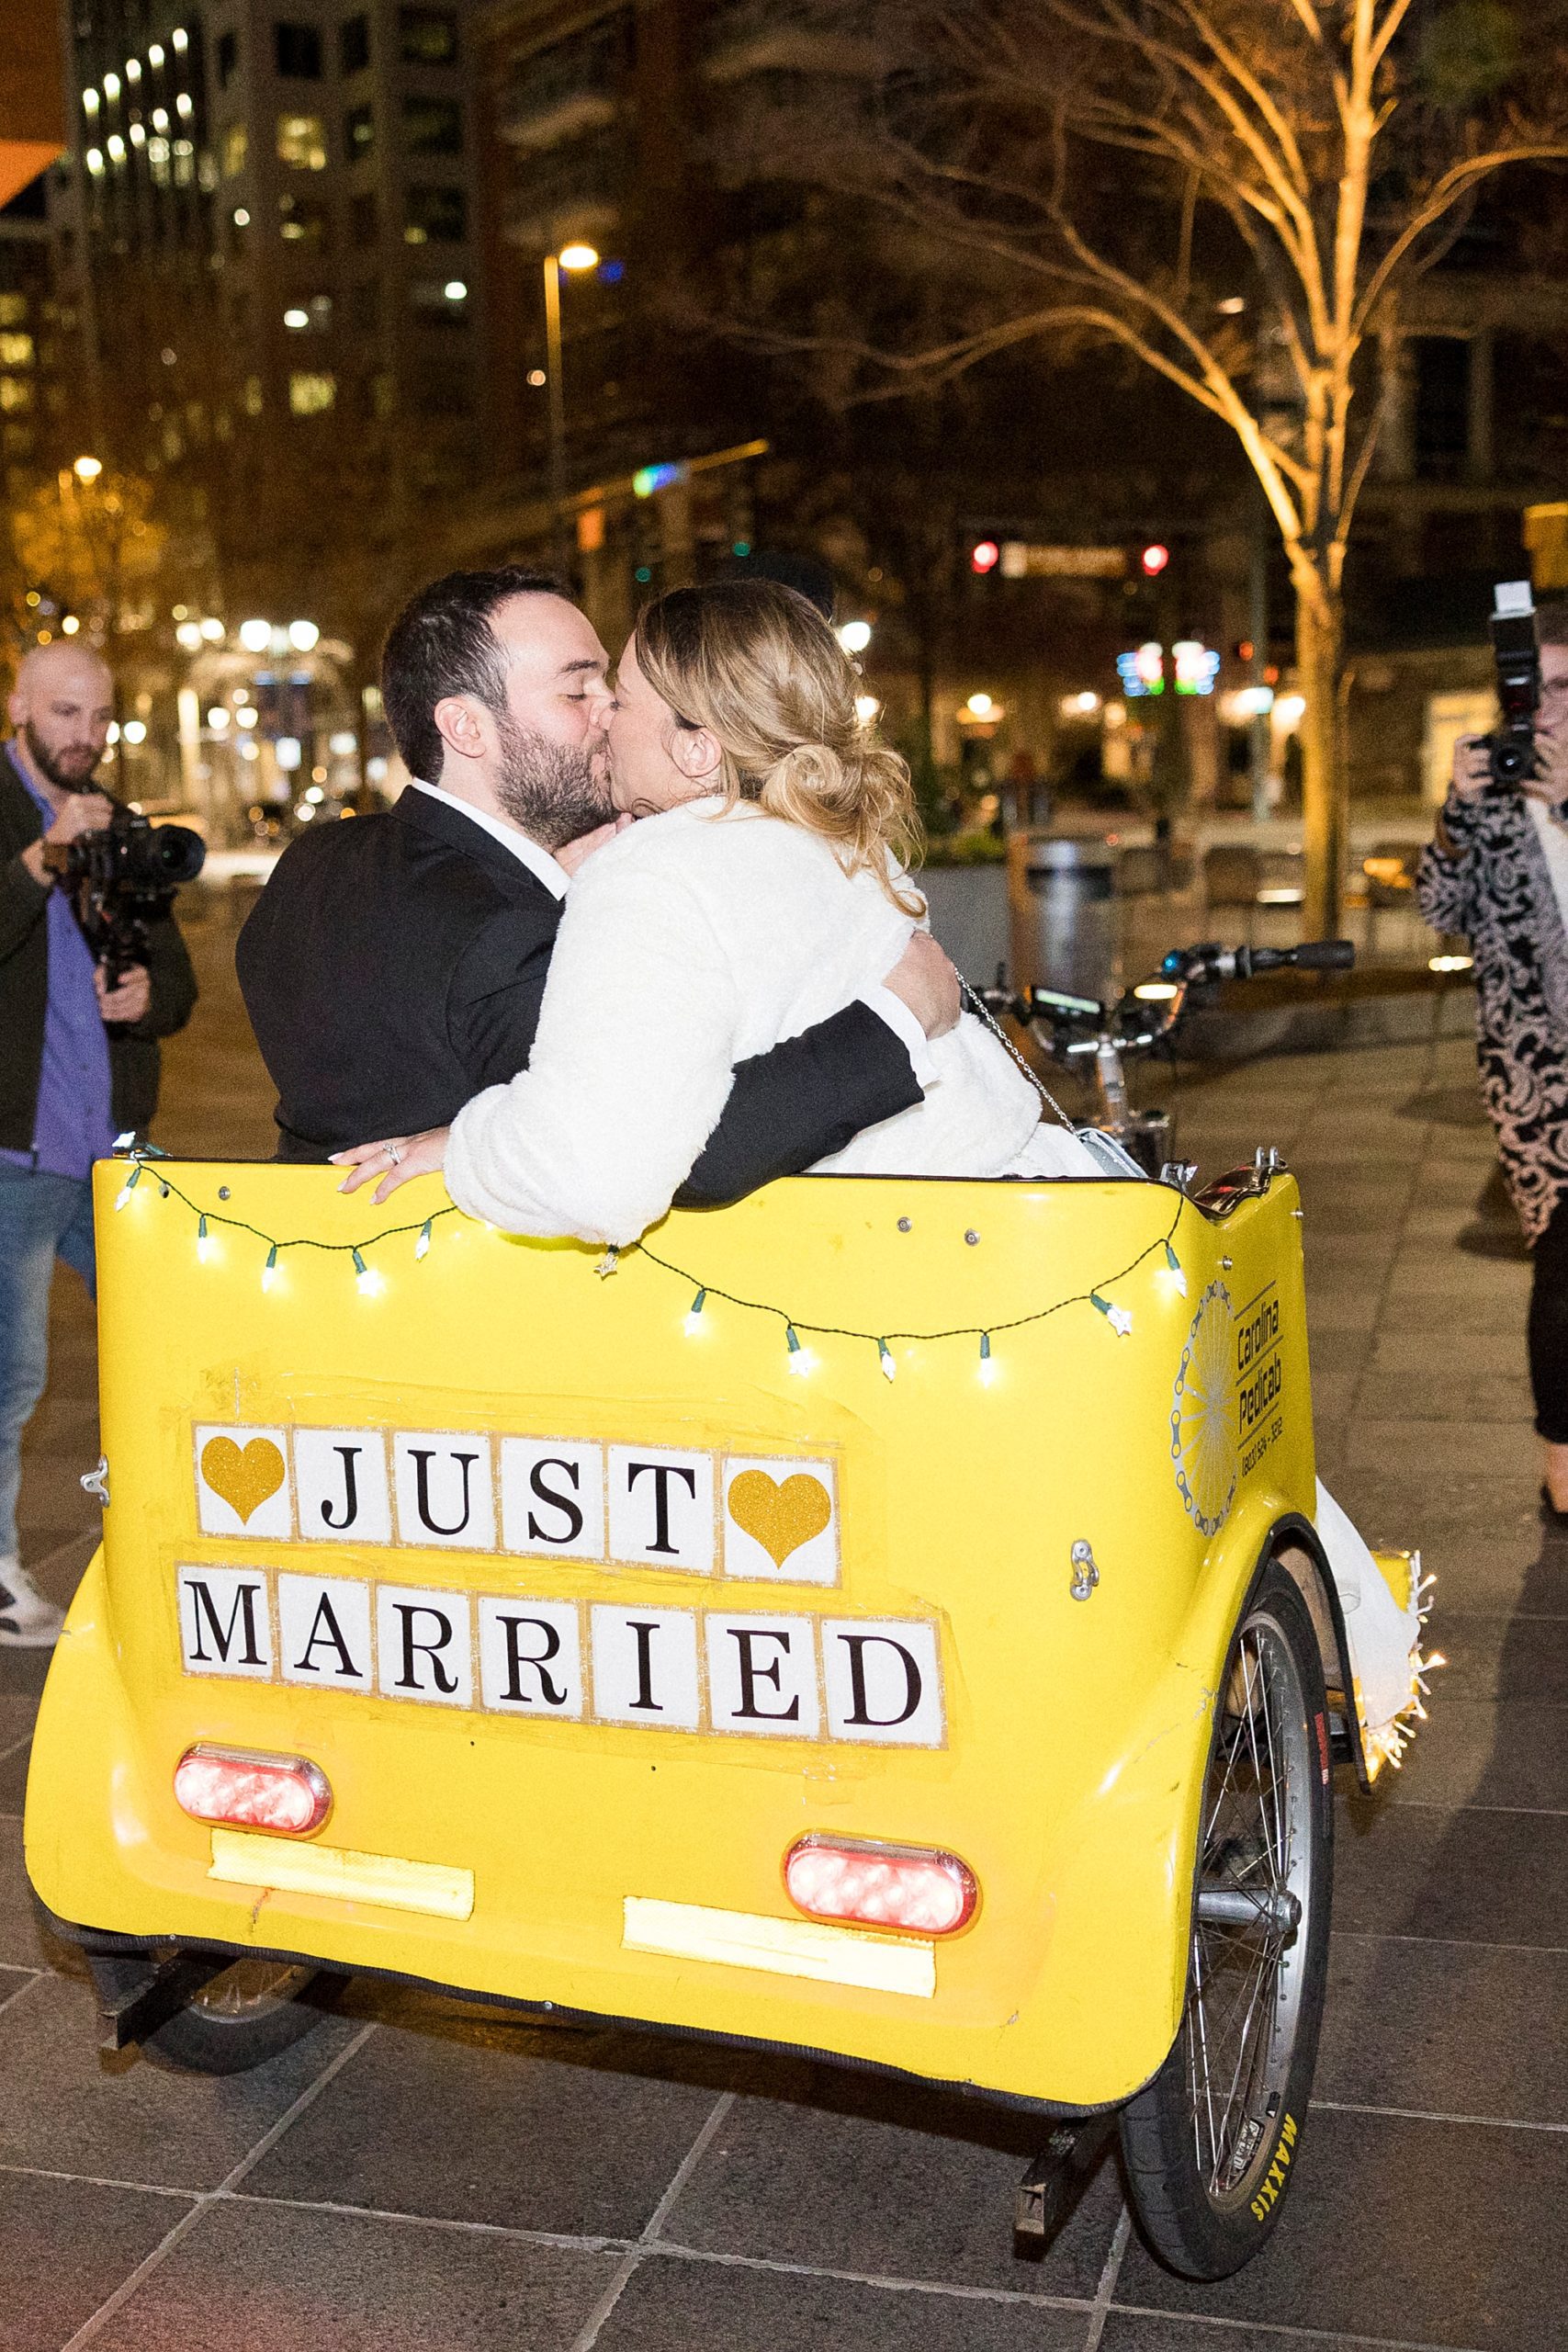 newlyweds kiss in pedi-cab during wedding getaway